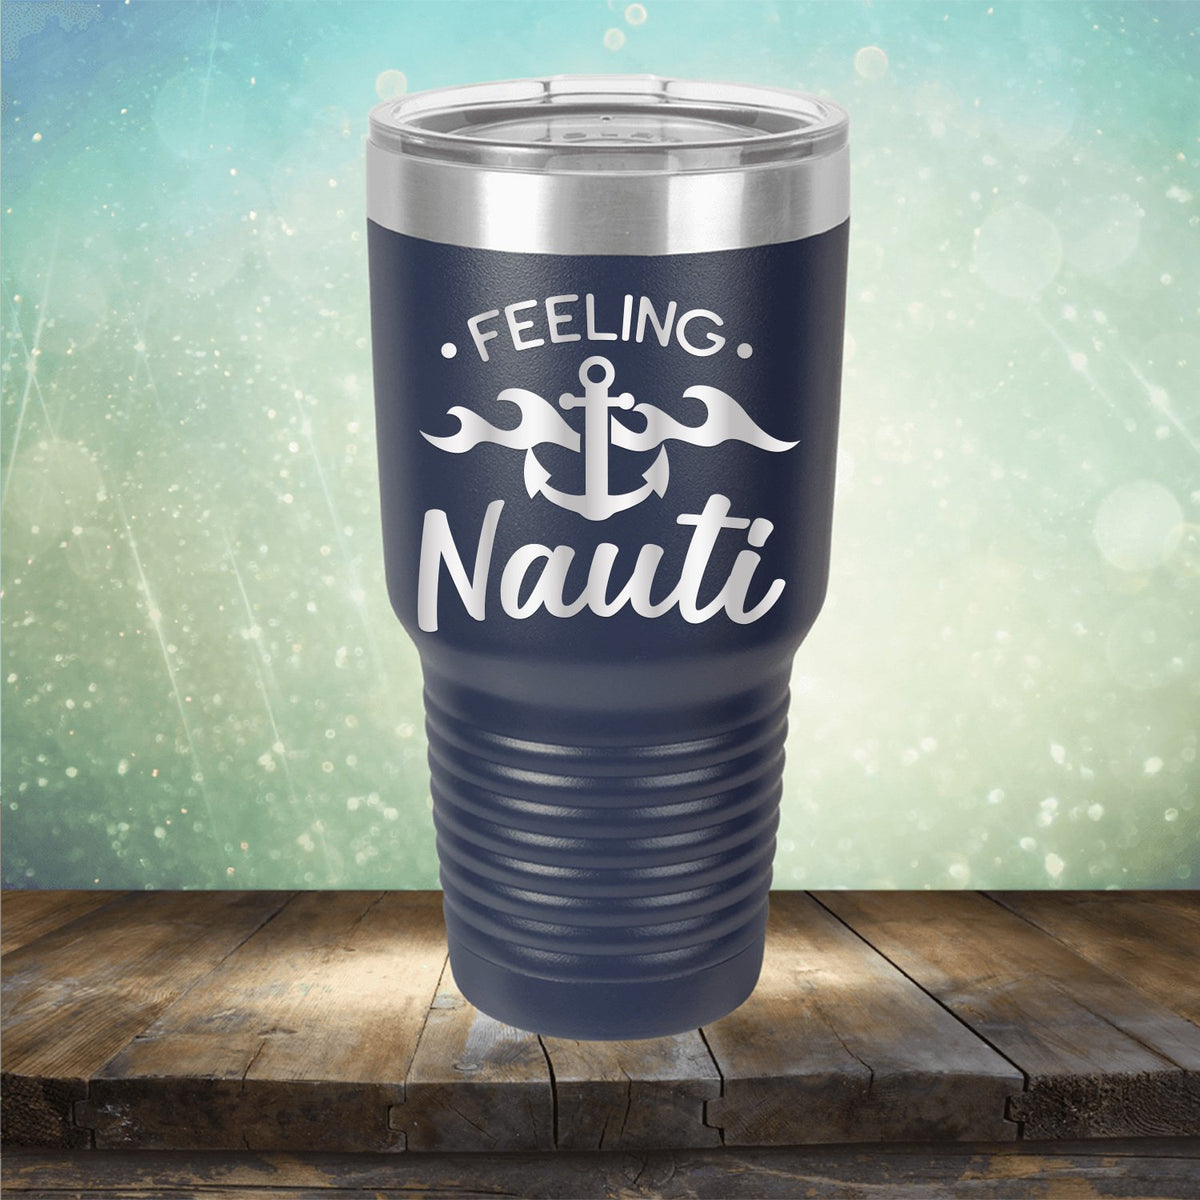 Feeling Nauti with Anchor